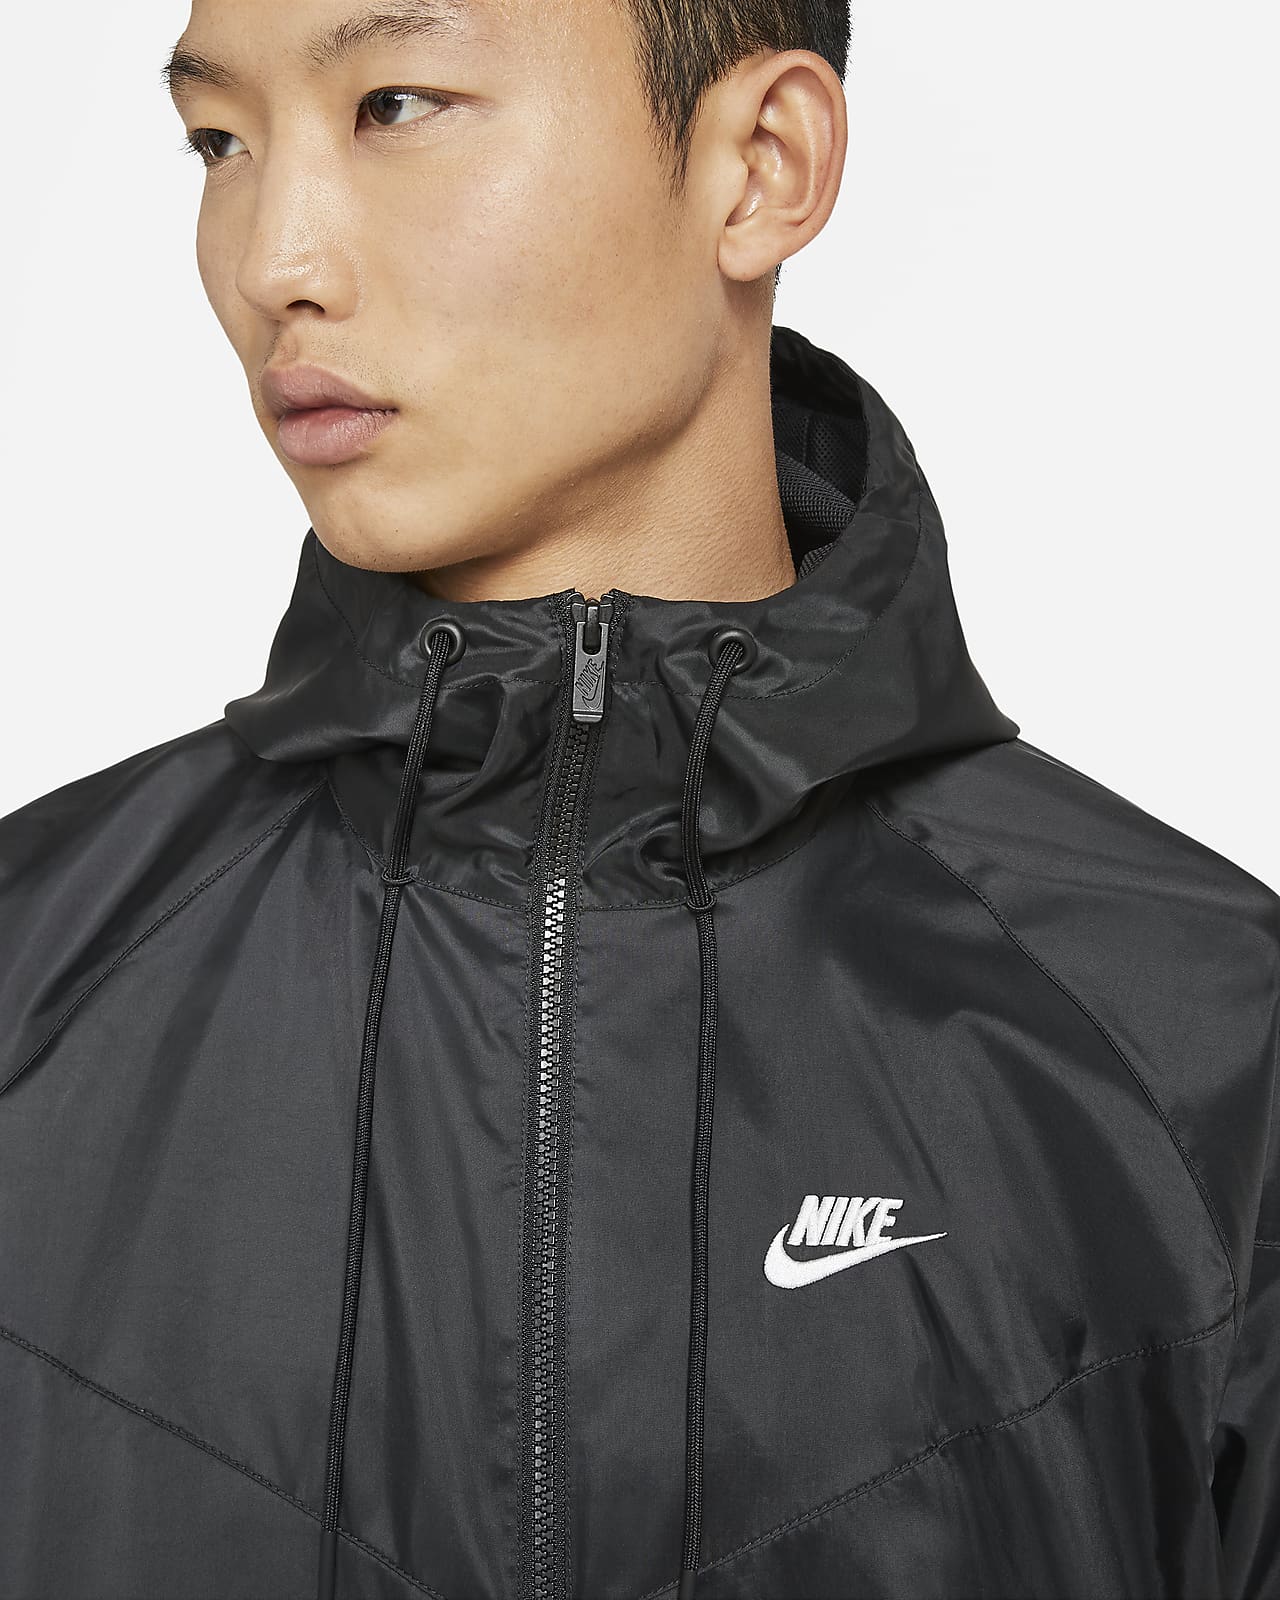 Nike公式 ナイキ スポーツウェア ウィンドランナー メンズ フーデッド ジャケット オンラインストア 通販サイト